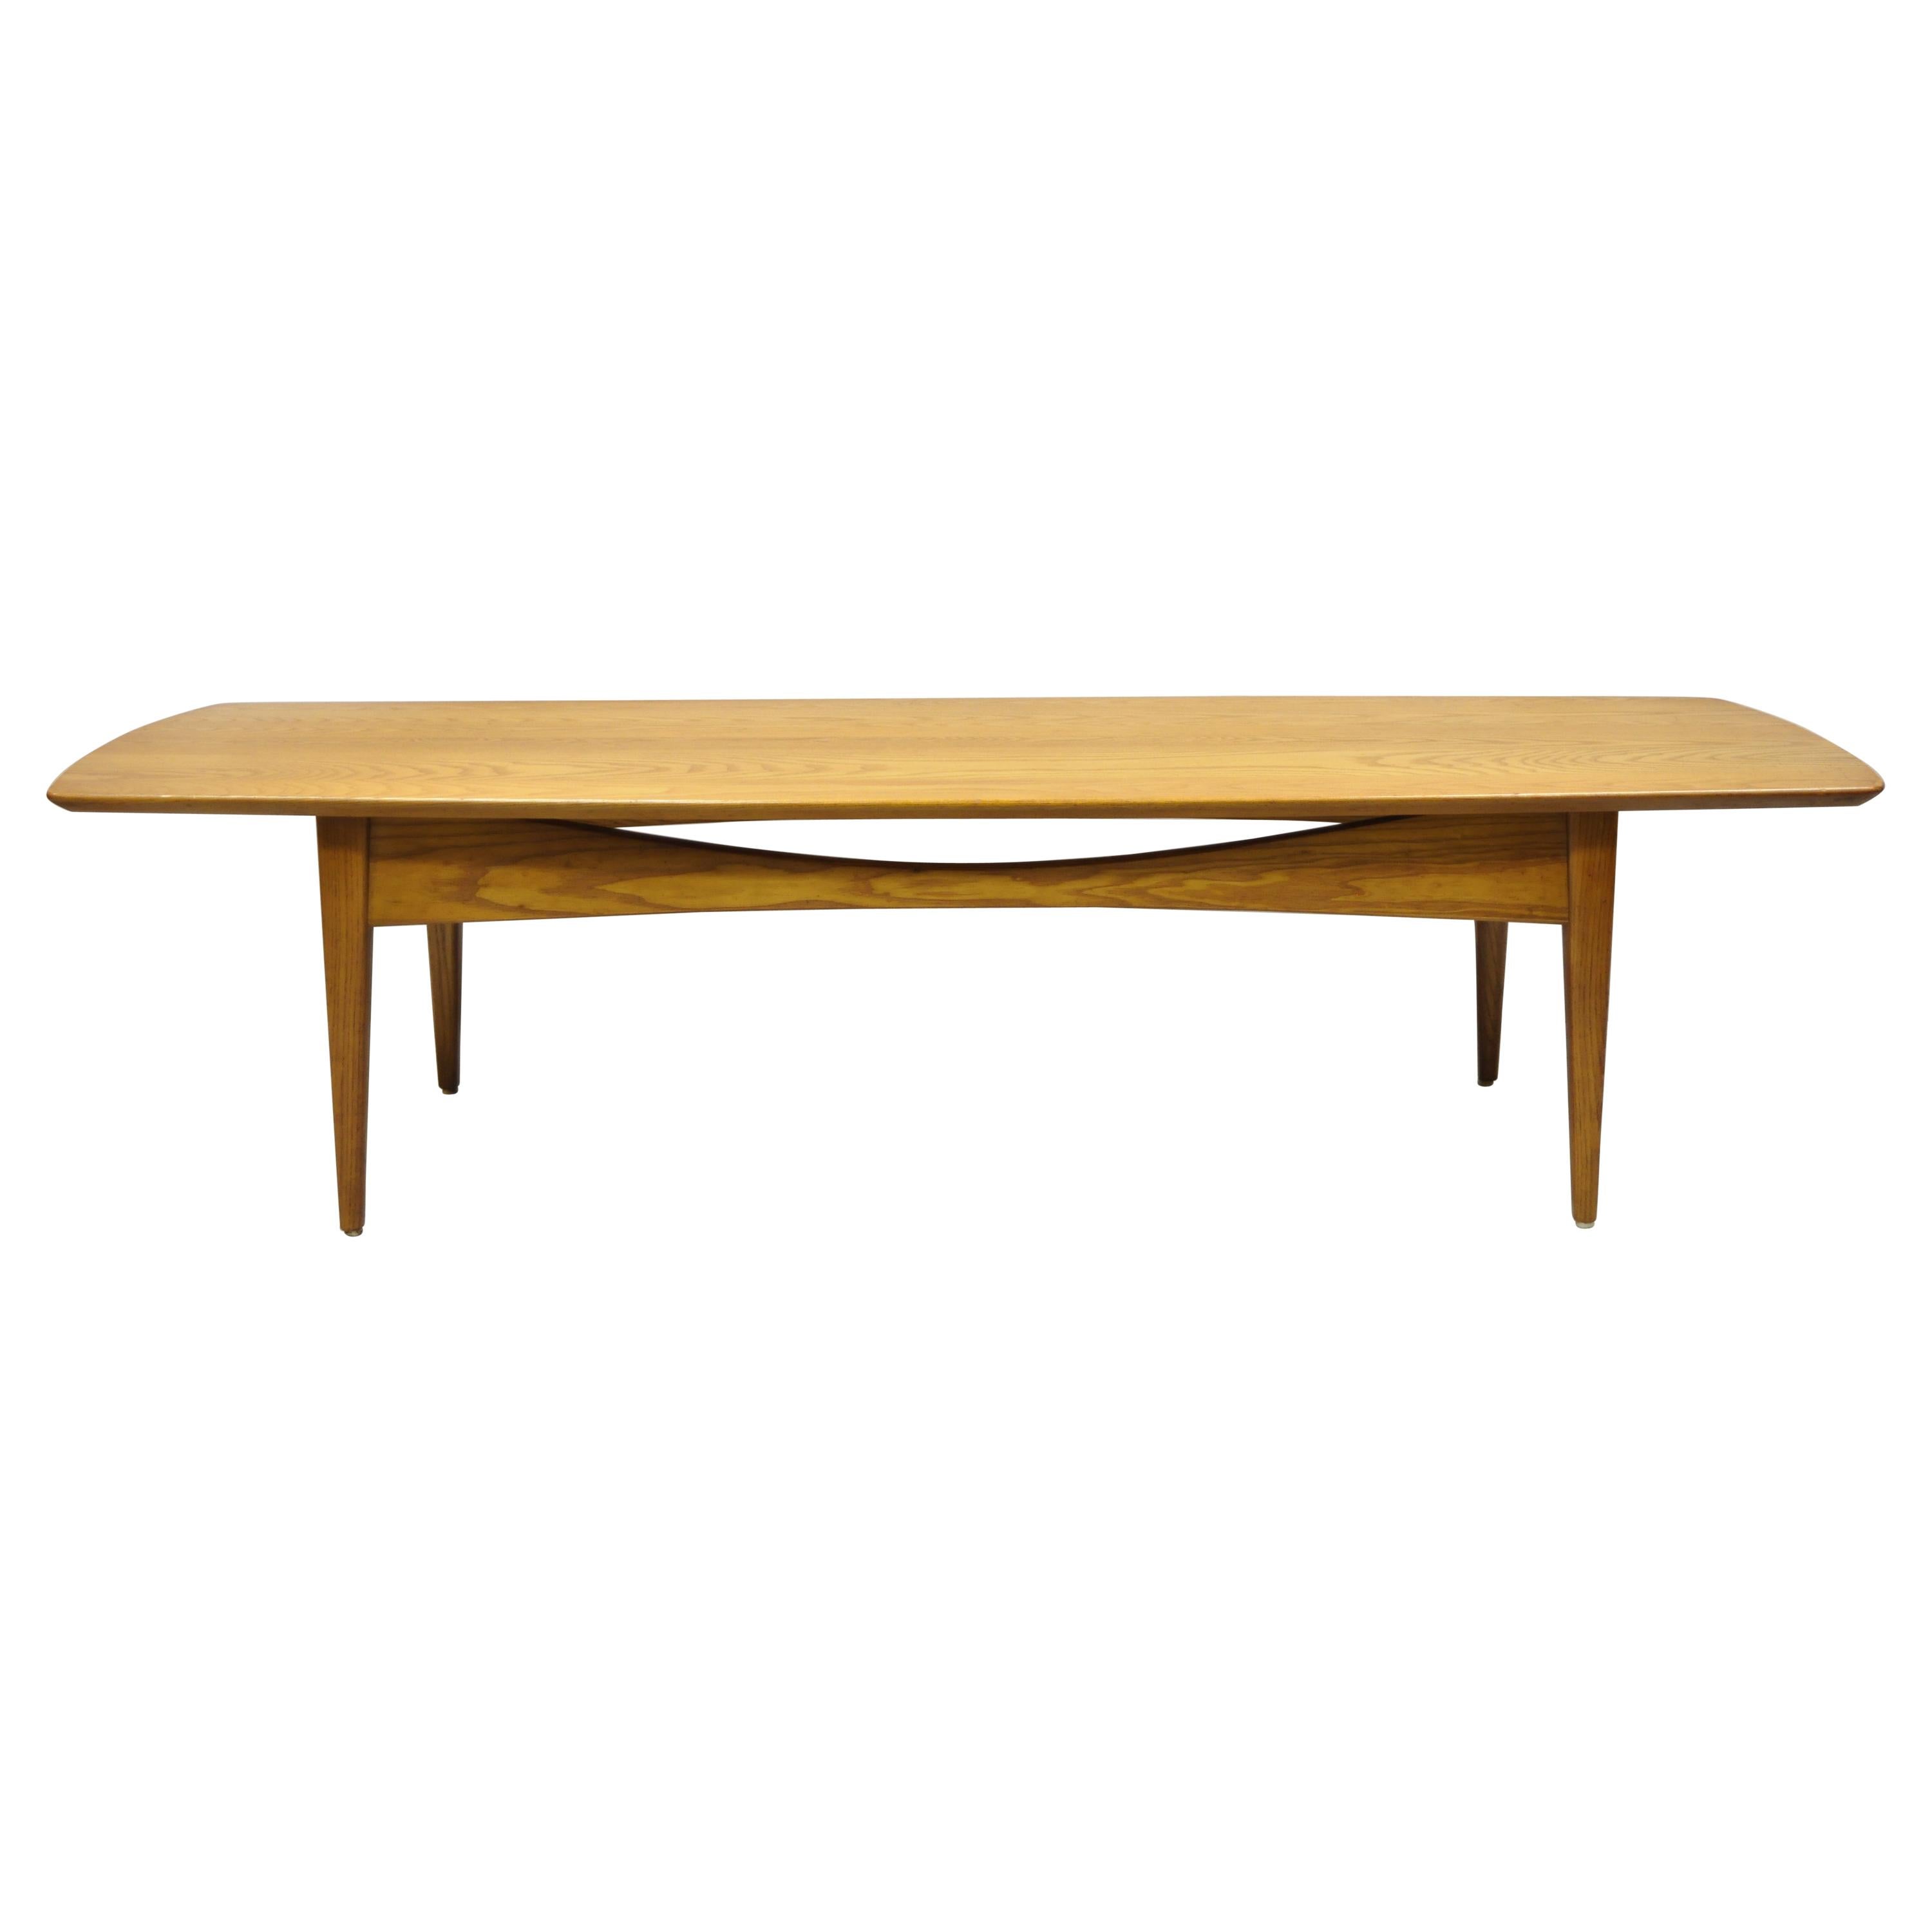 Vintage Mid-Century Modern Teak Wood Surfboard Long Coffee Table 701-G